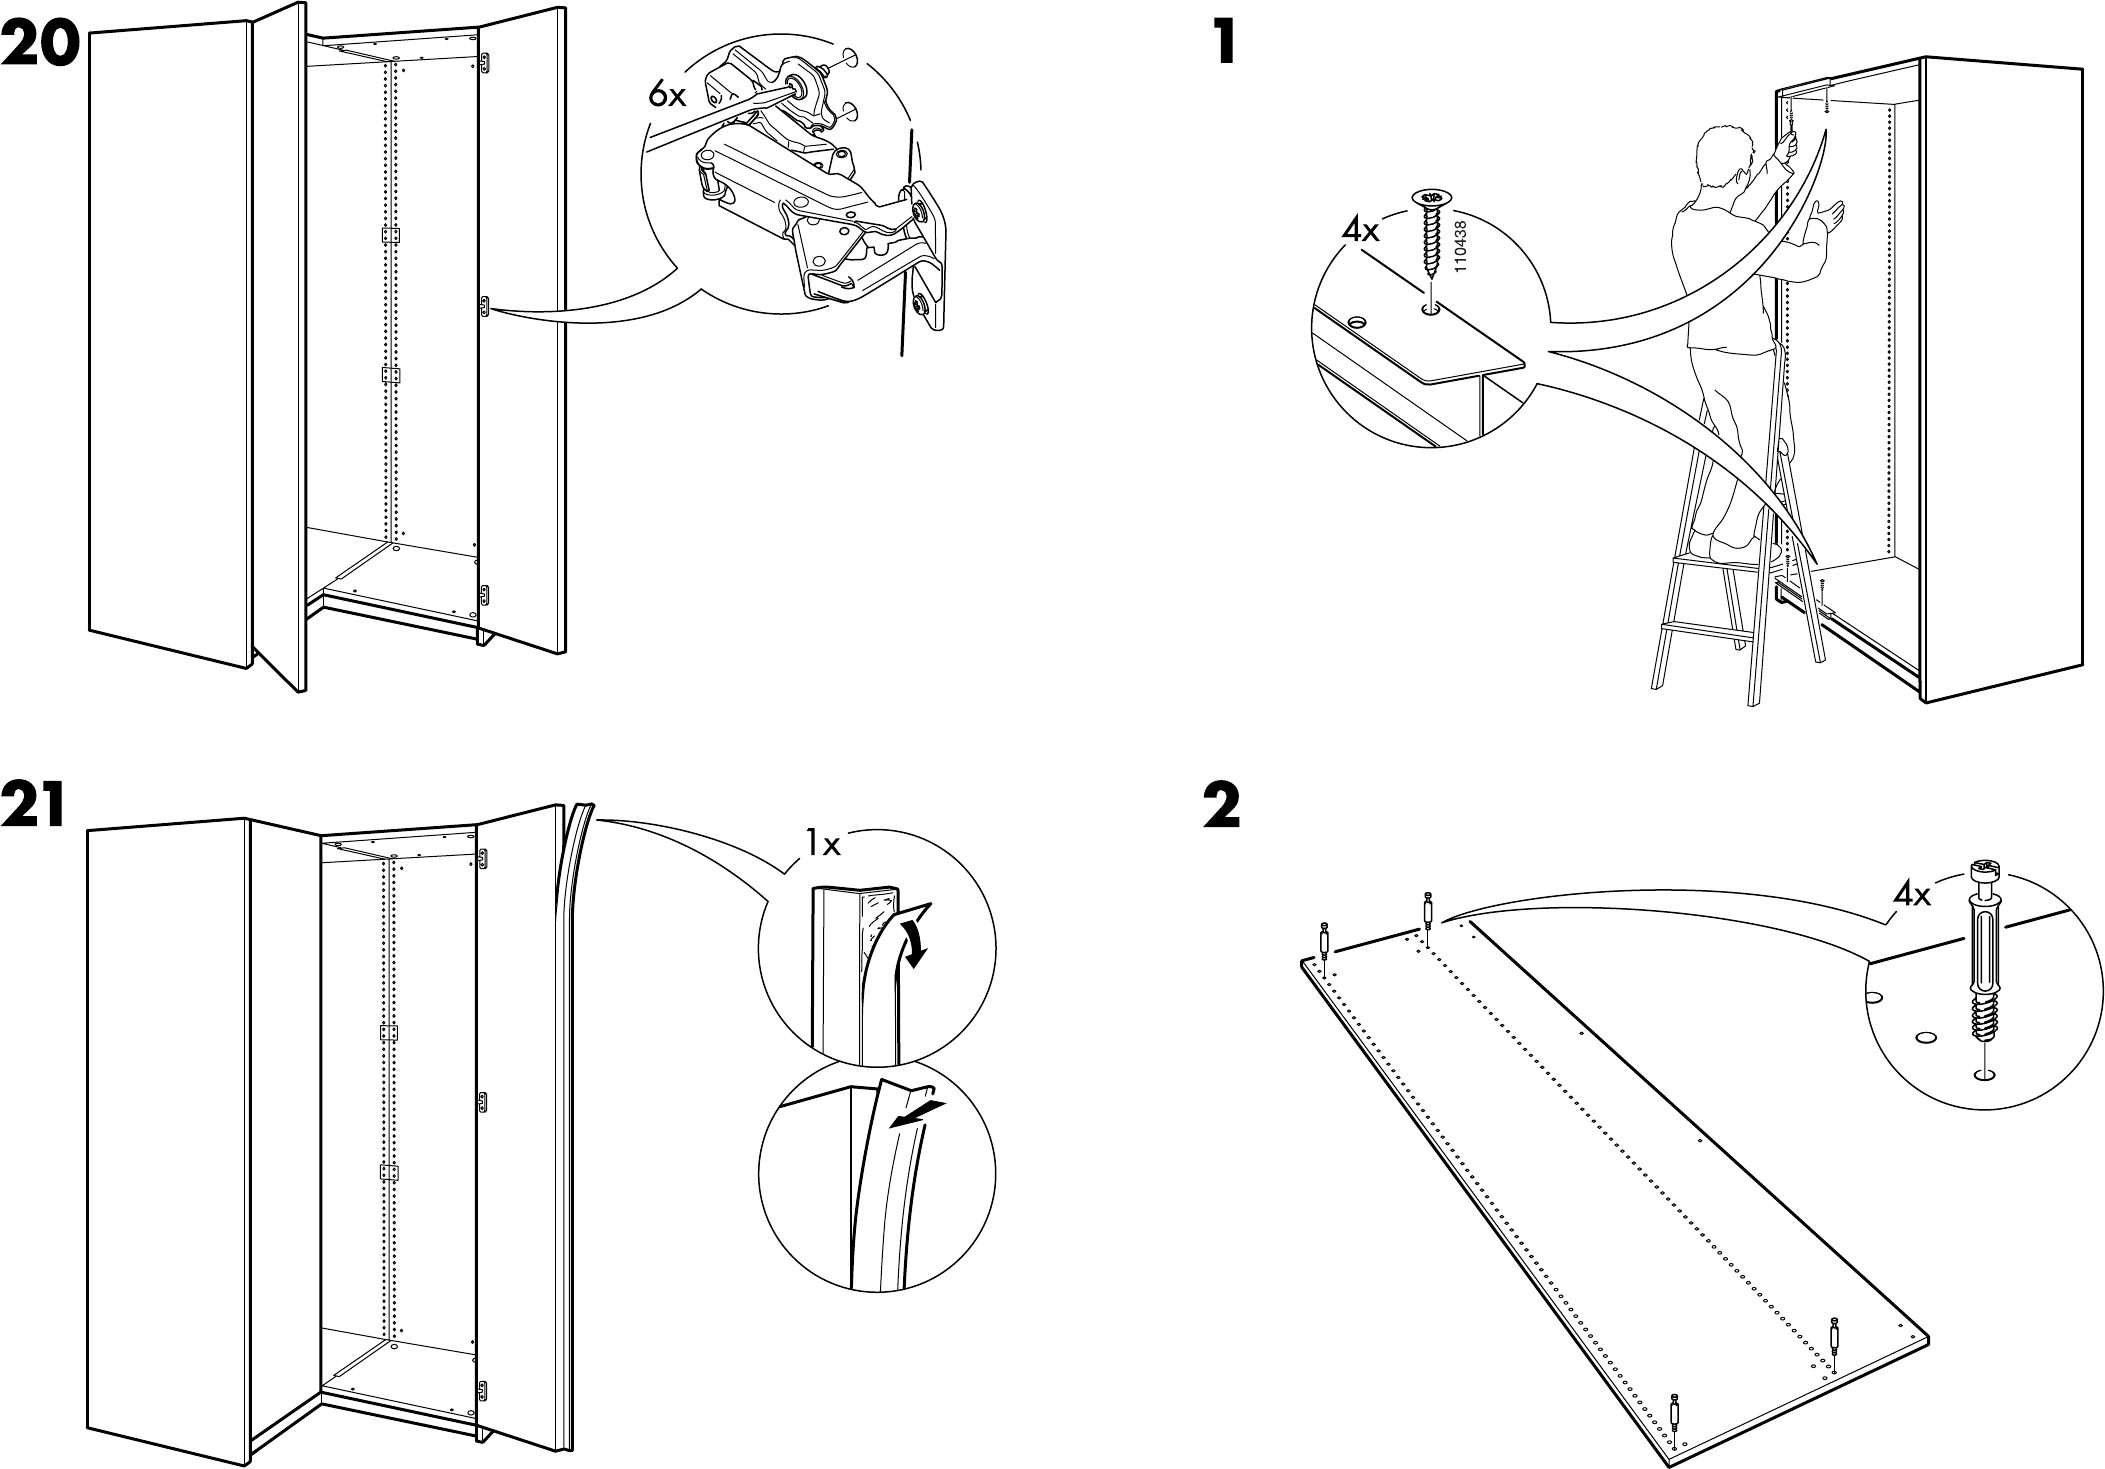 Manual Ikea Pax hoekkast (page 12 of (English, German, Dutch, Danish, French, Italian, Polish, Portuguese, Swedish, Norwegian, Finnish)